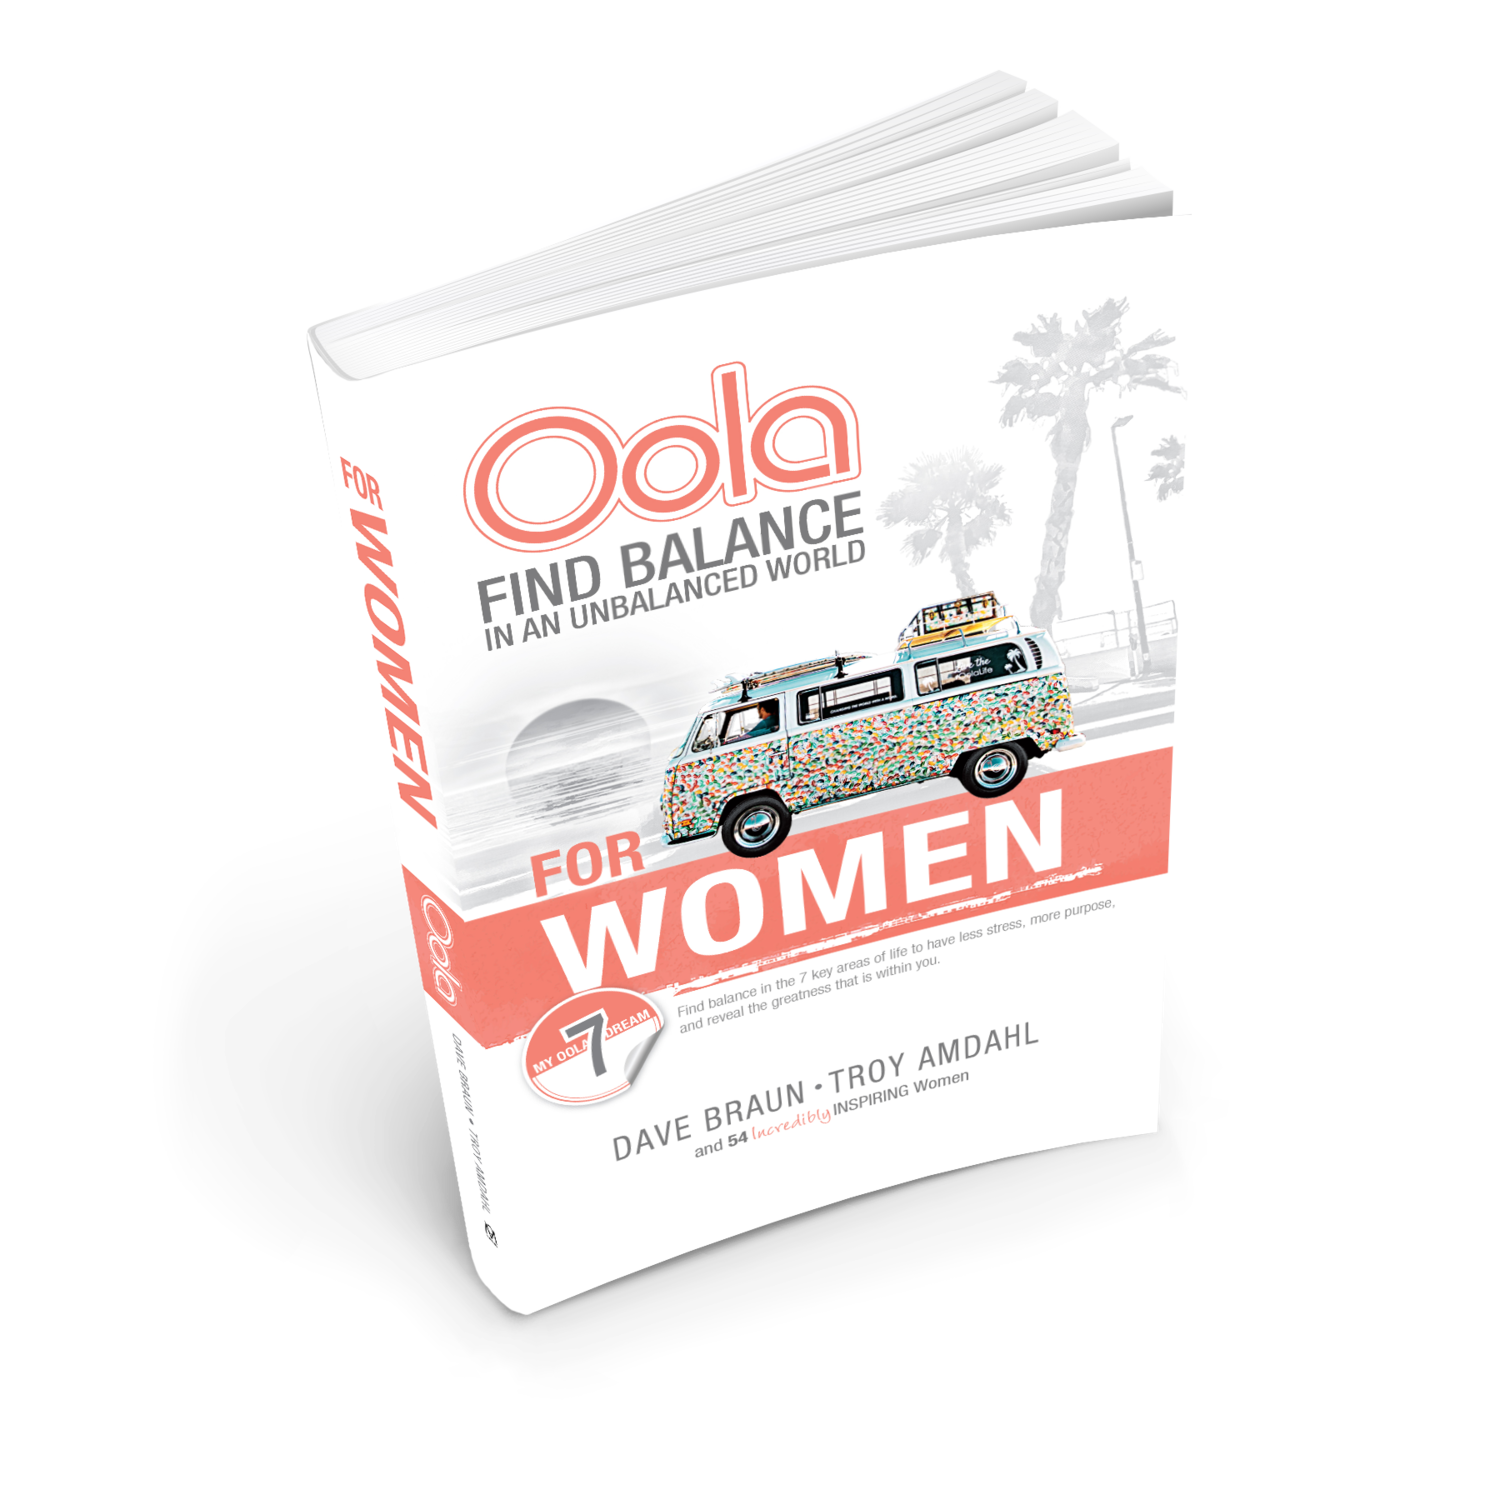 Oola for Women (24 book bundle)